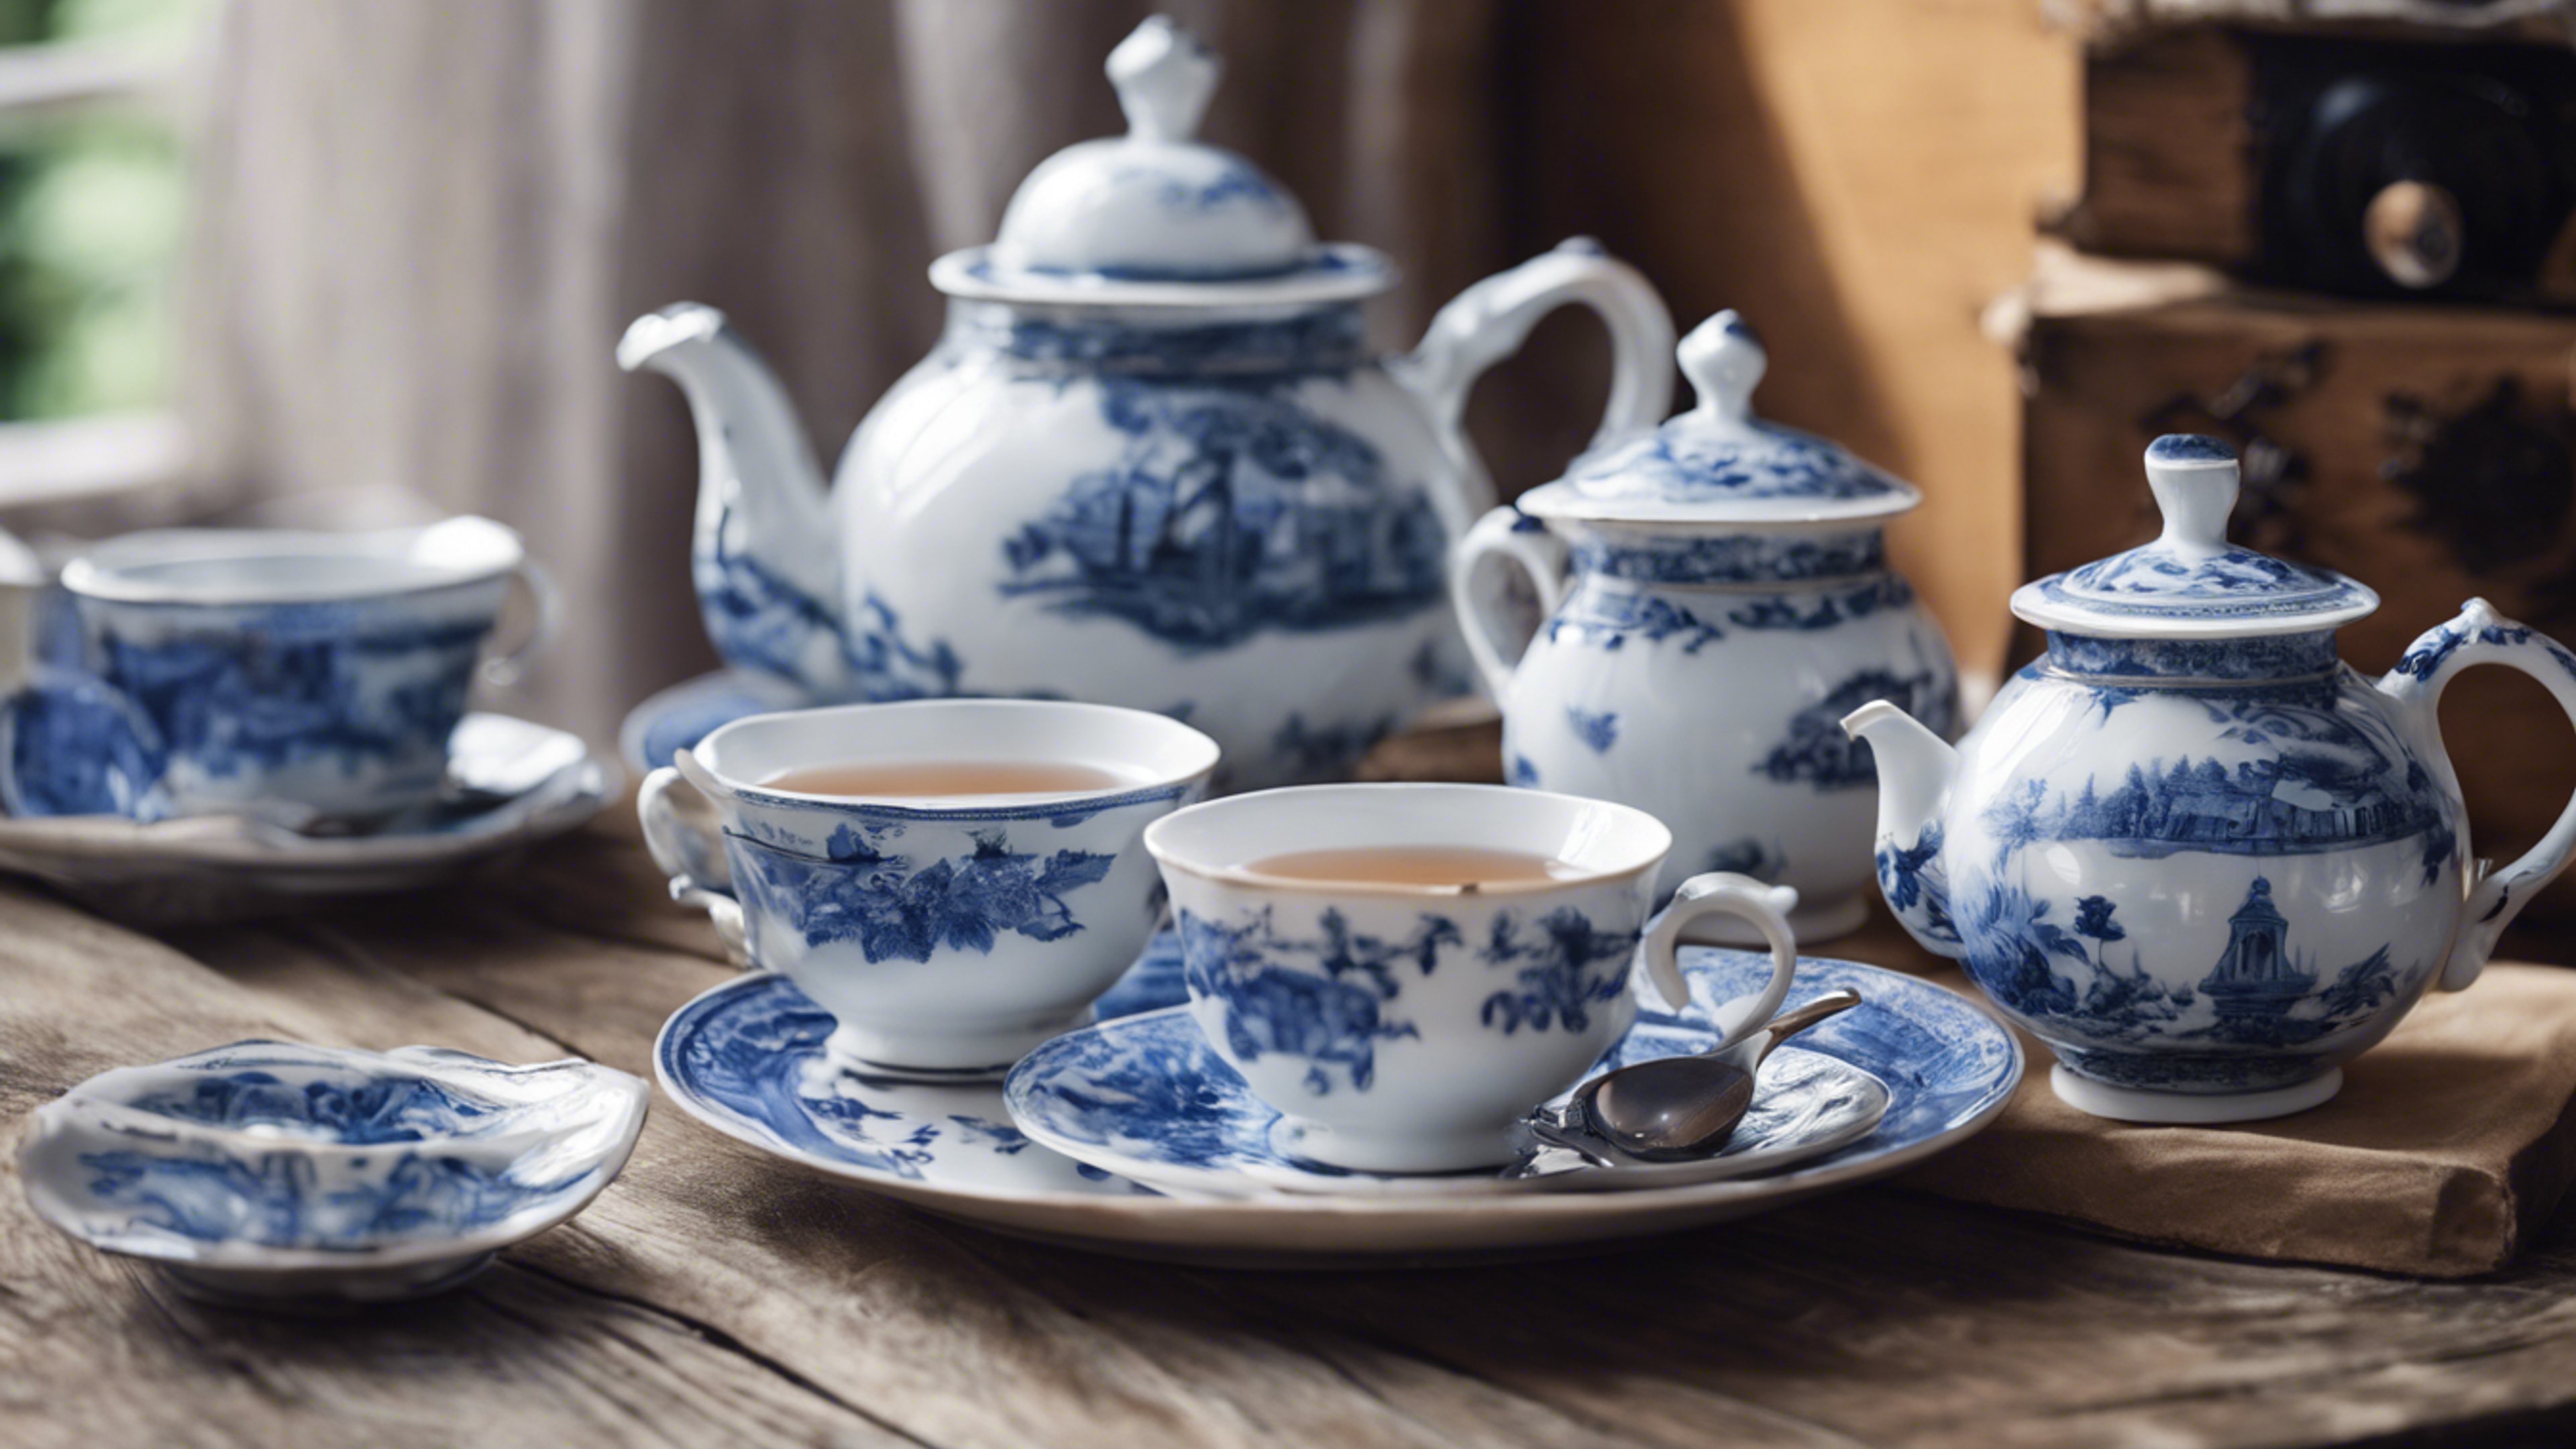 Vintage porcelain tea set in blue and white, placed on a rustic wooden table. Papel de parede[4fbd951e4e494dd09da7]